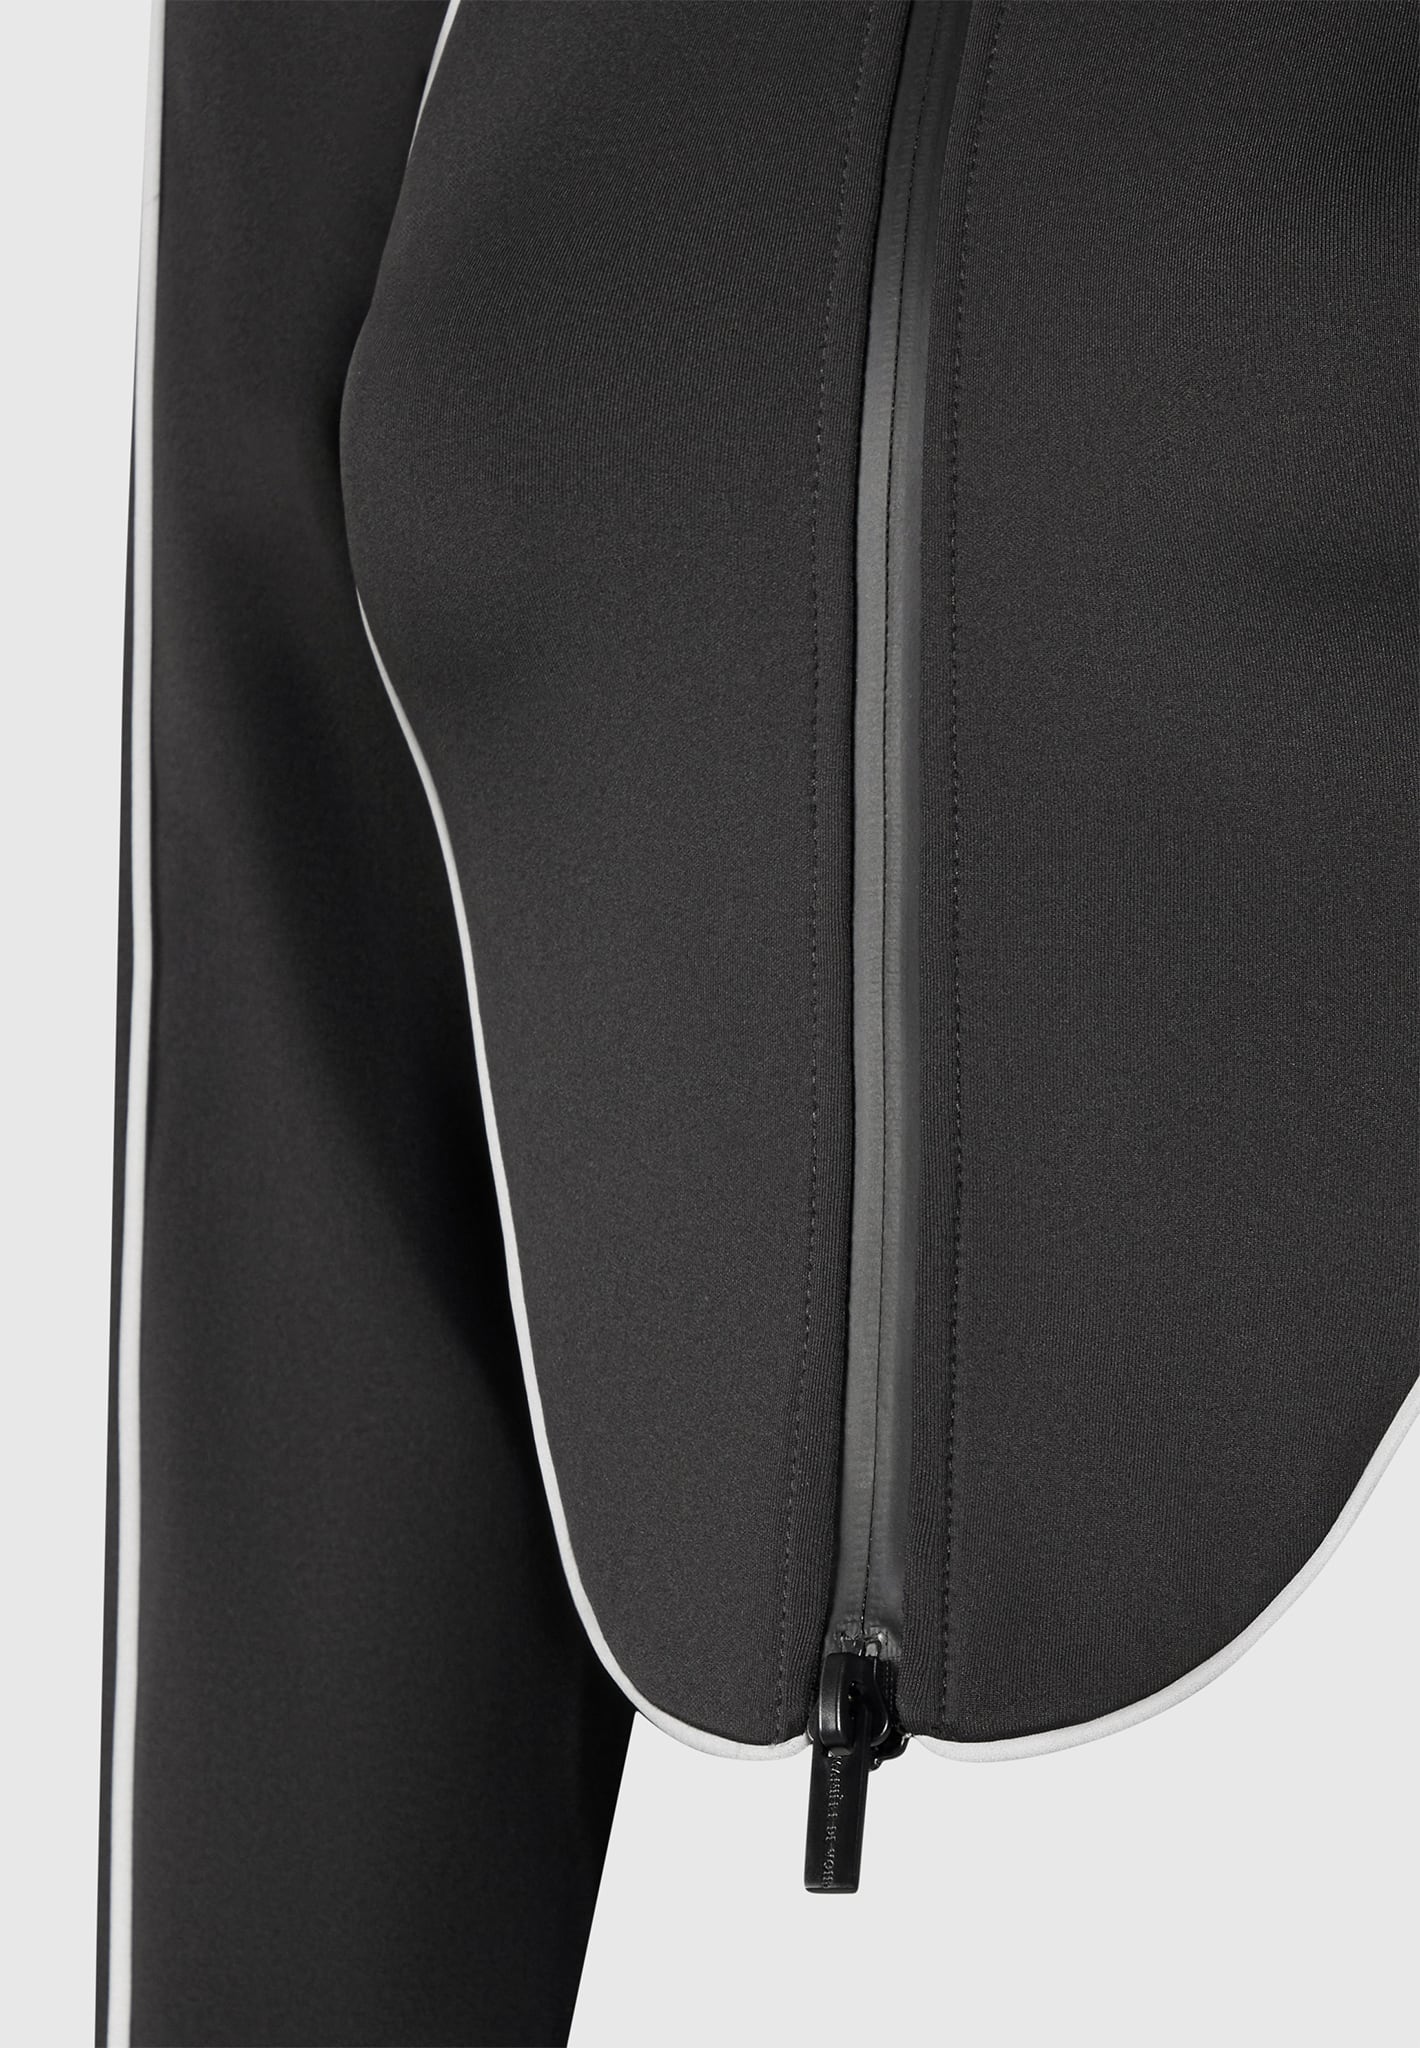 reflective-piped-long-sleeve-corset-jacket-black